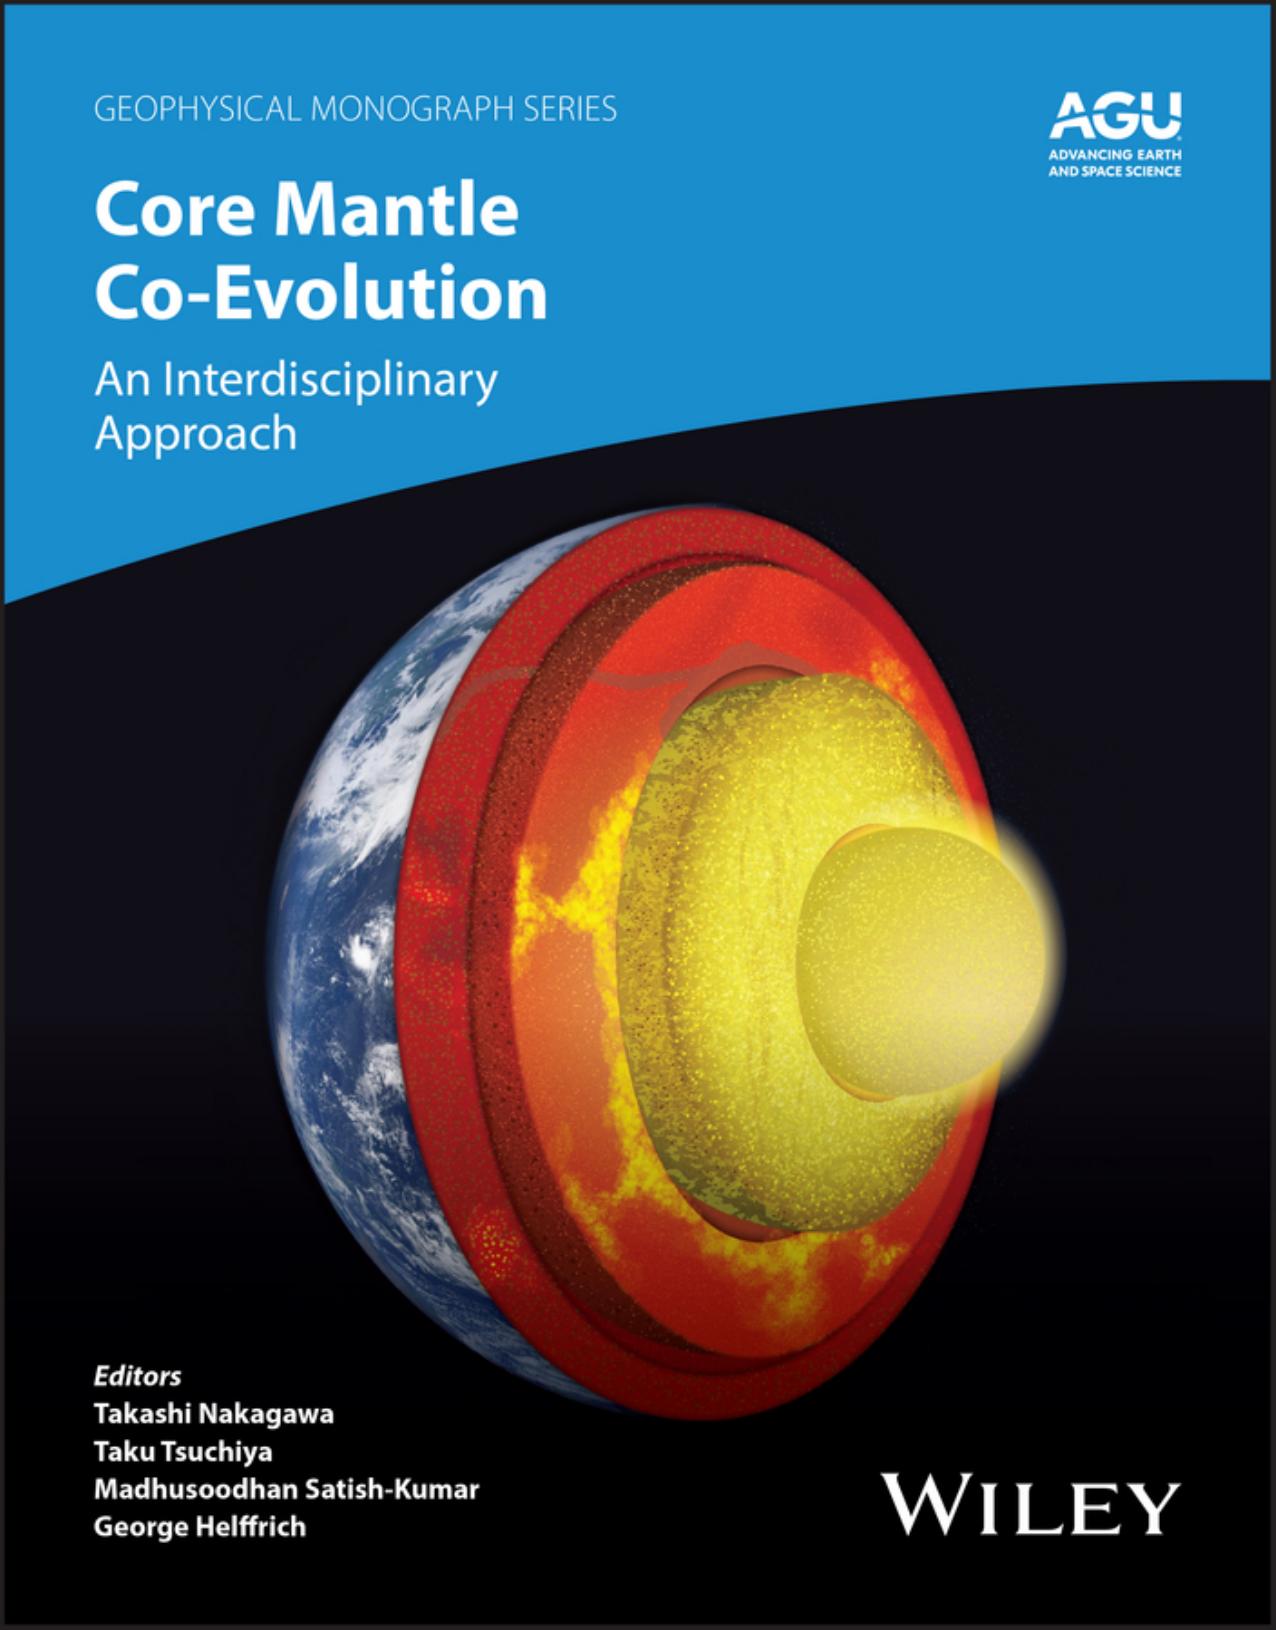 Core-Mantle Co-Evolution: An Interdisciplinary Approach by Takashi Nakagawa Taku Tsuchiya Madhusoodhan Satish-Kumar George Helffrich